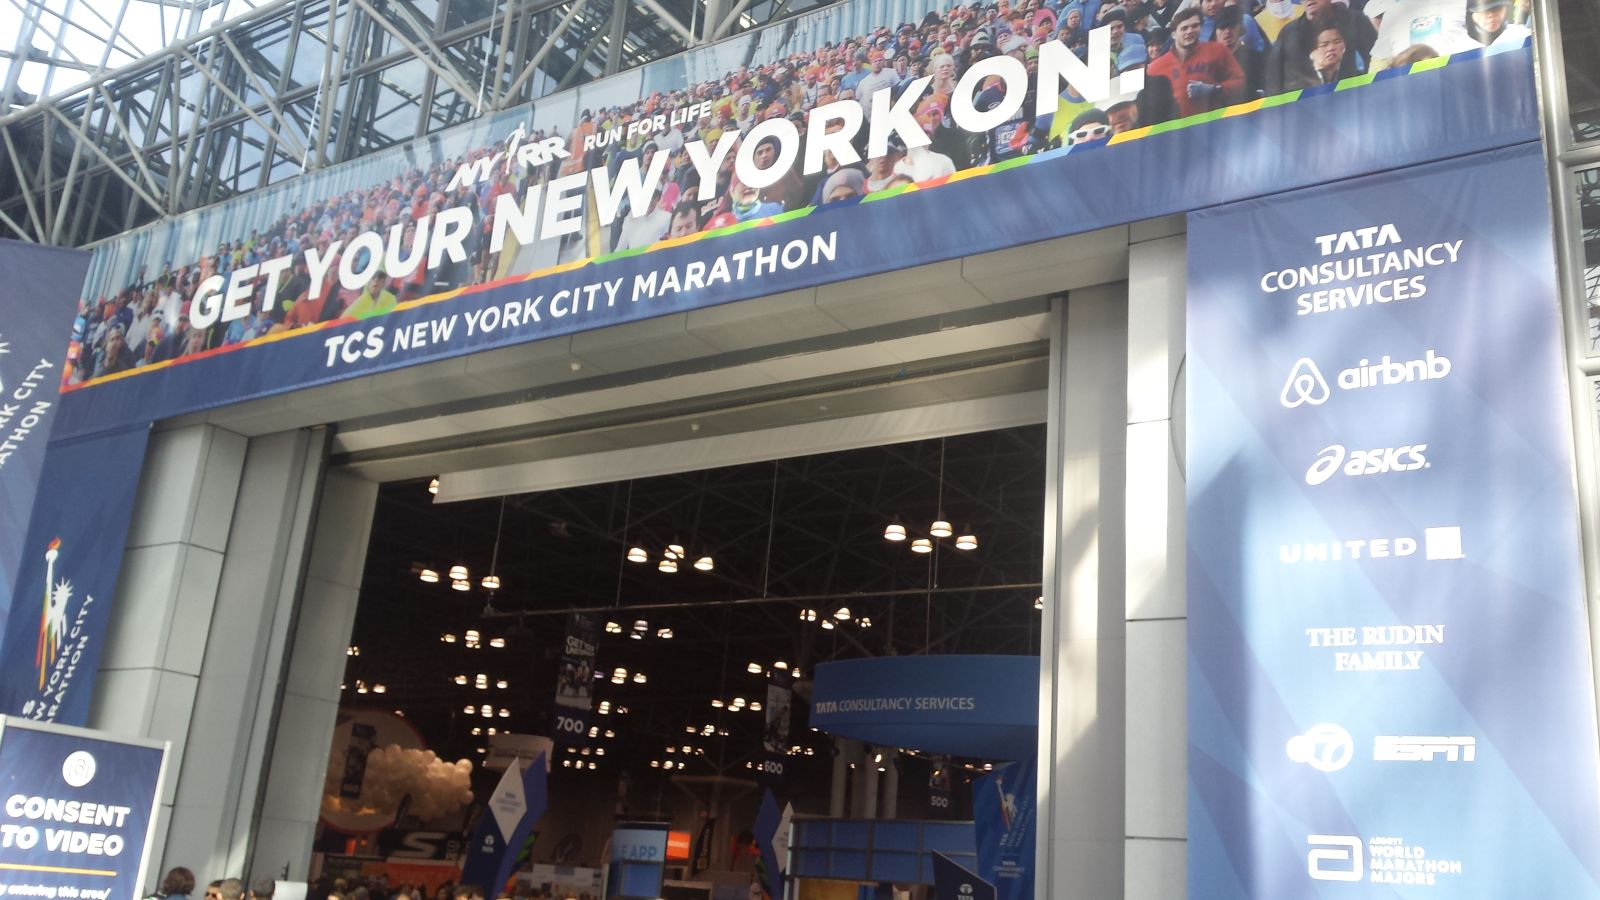 New York Marathon - ROADRUNNINGReview.com